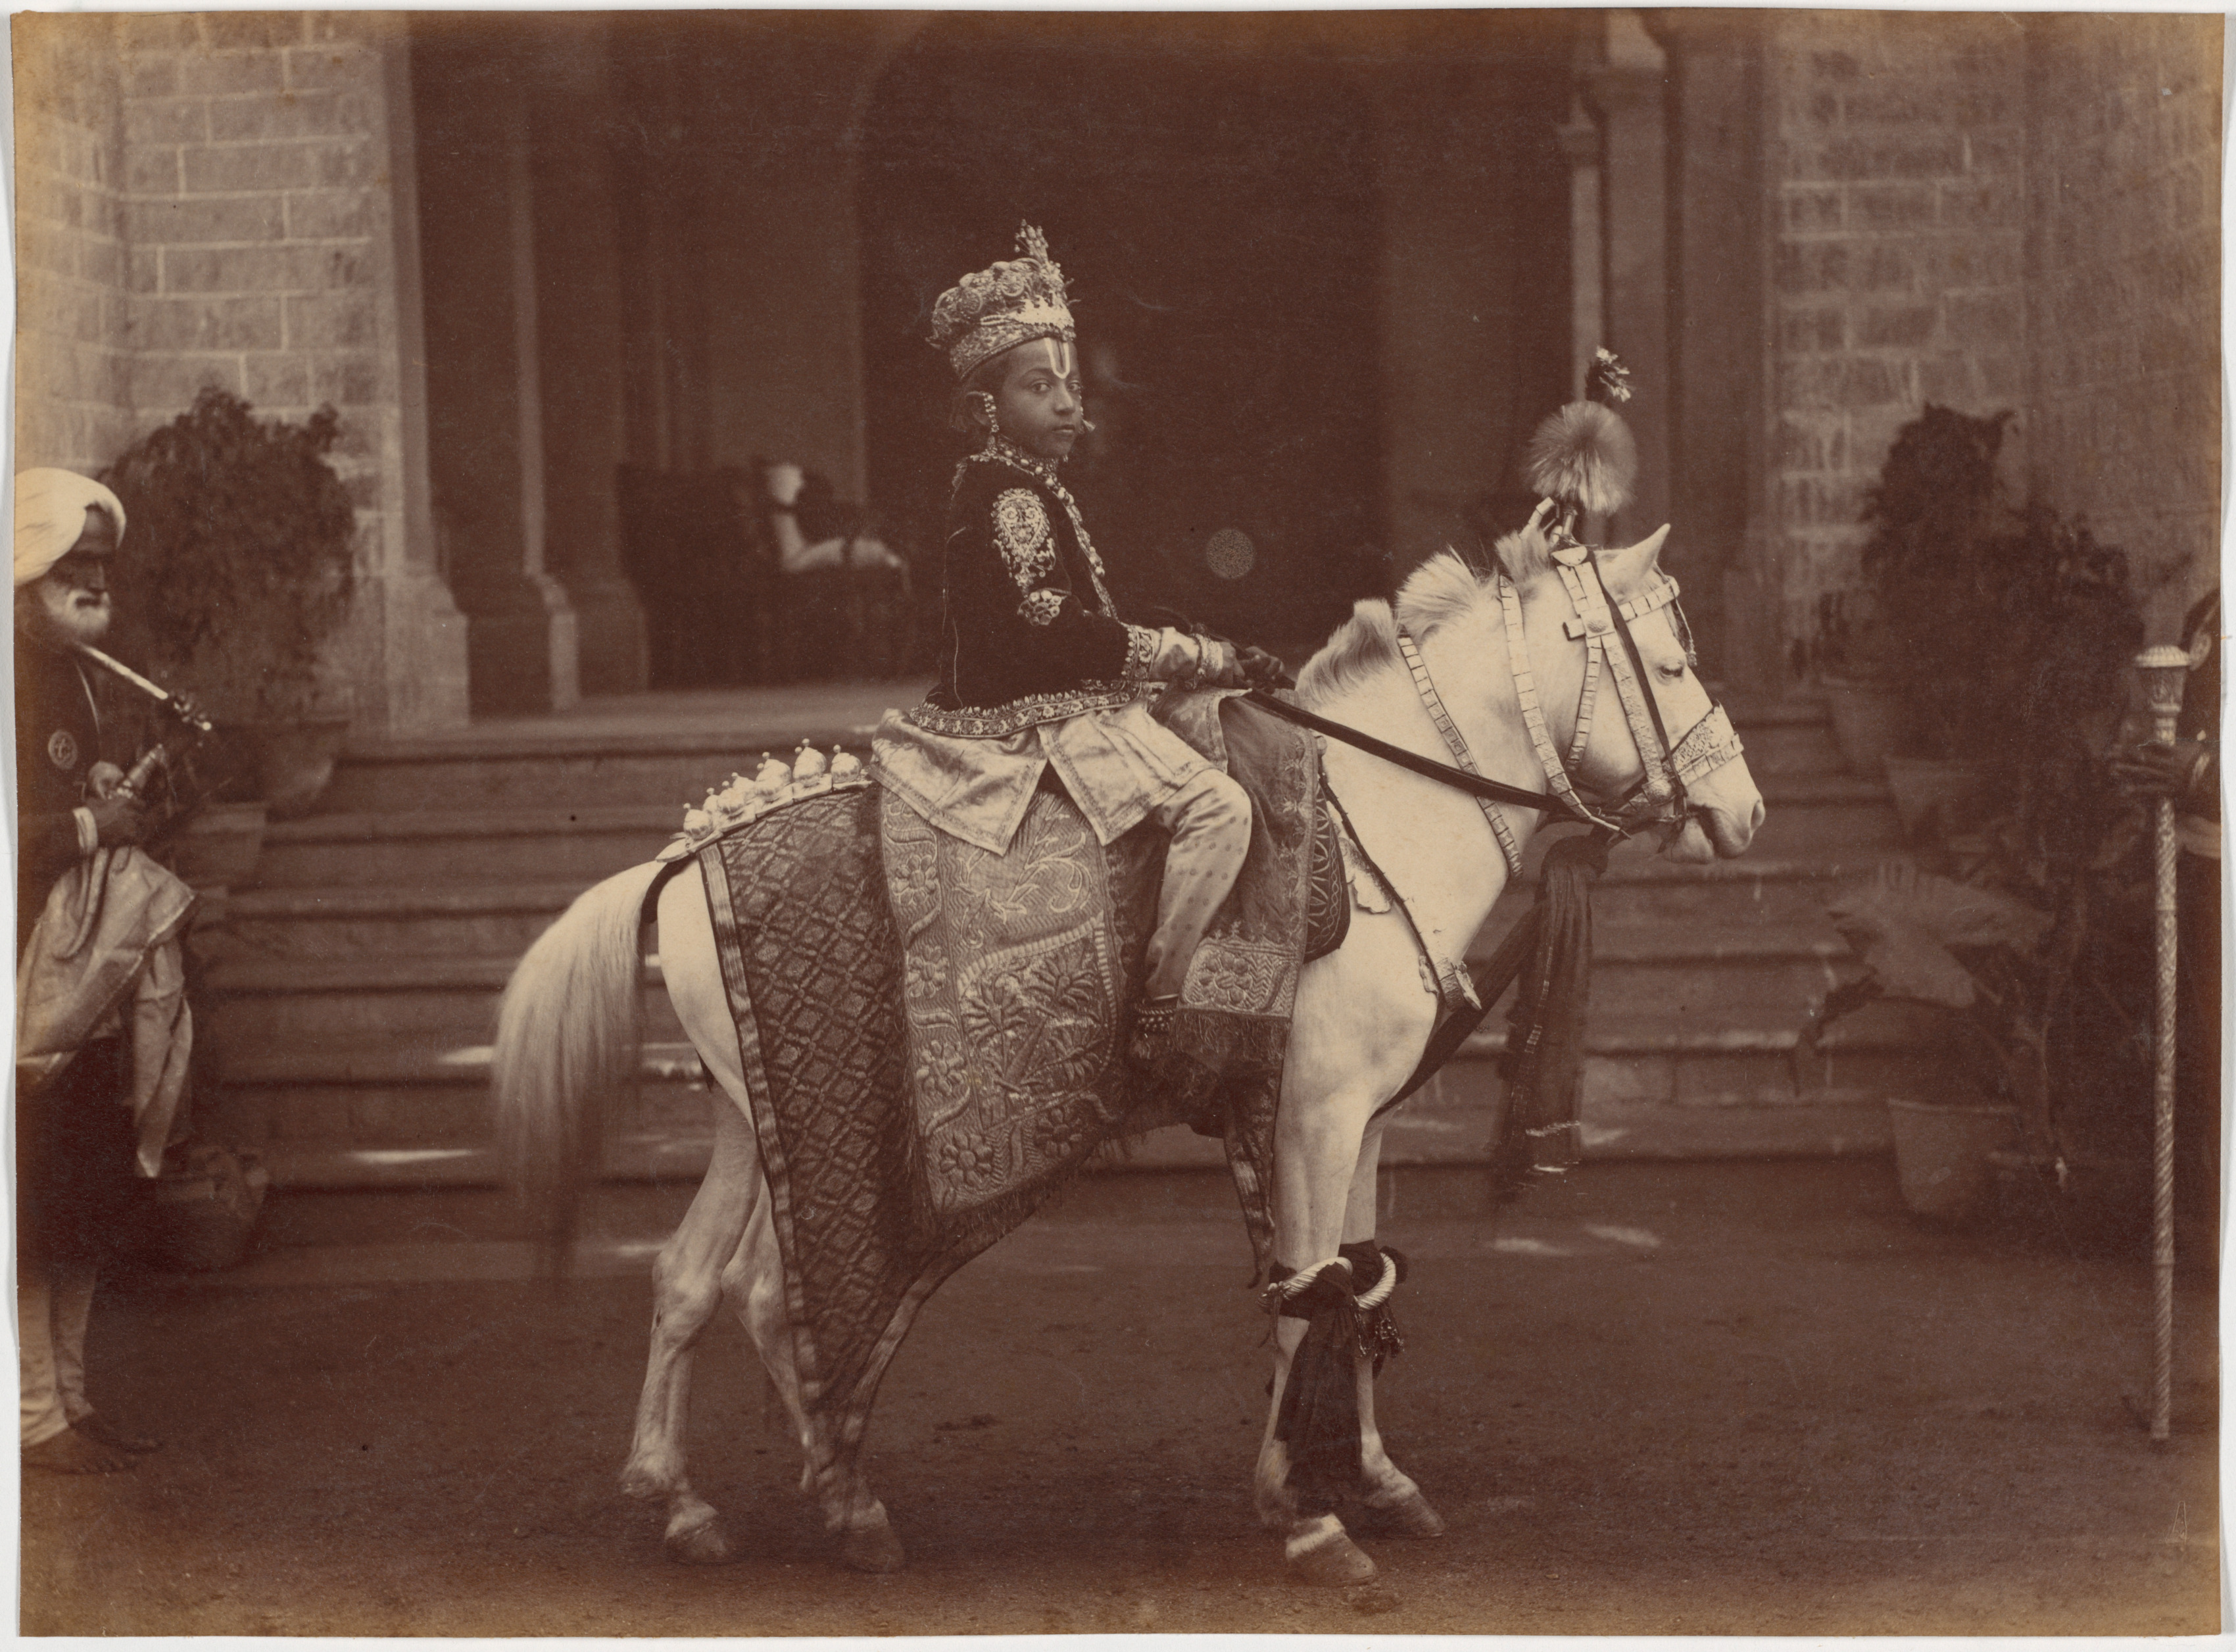 His Highness the Maharaja of Rewa